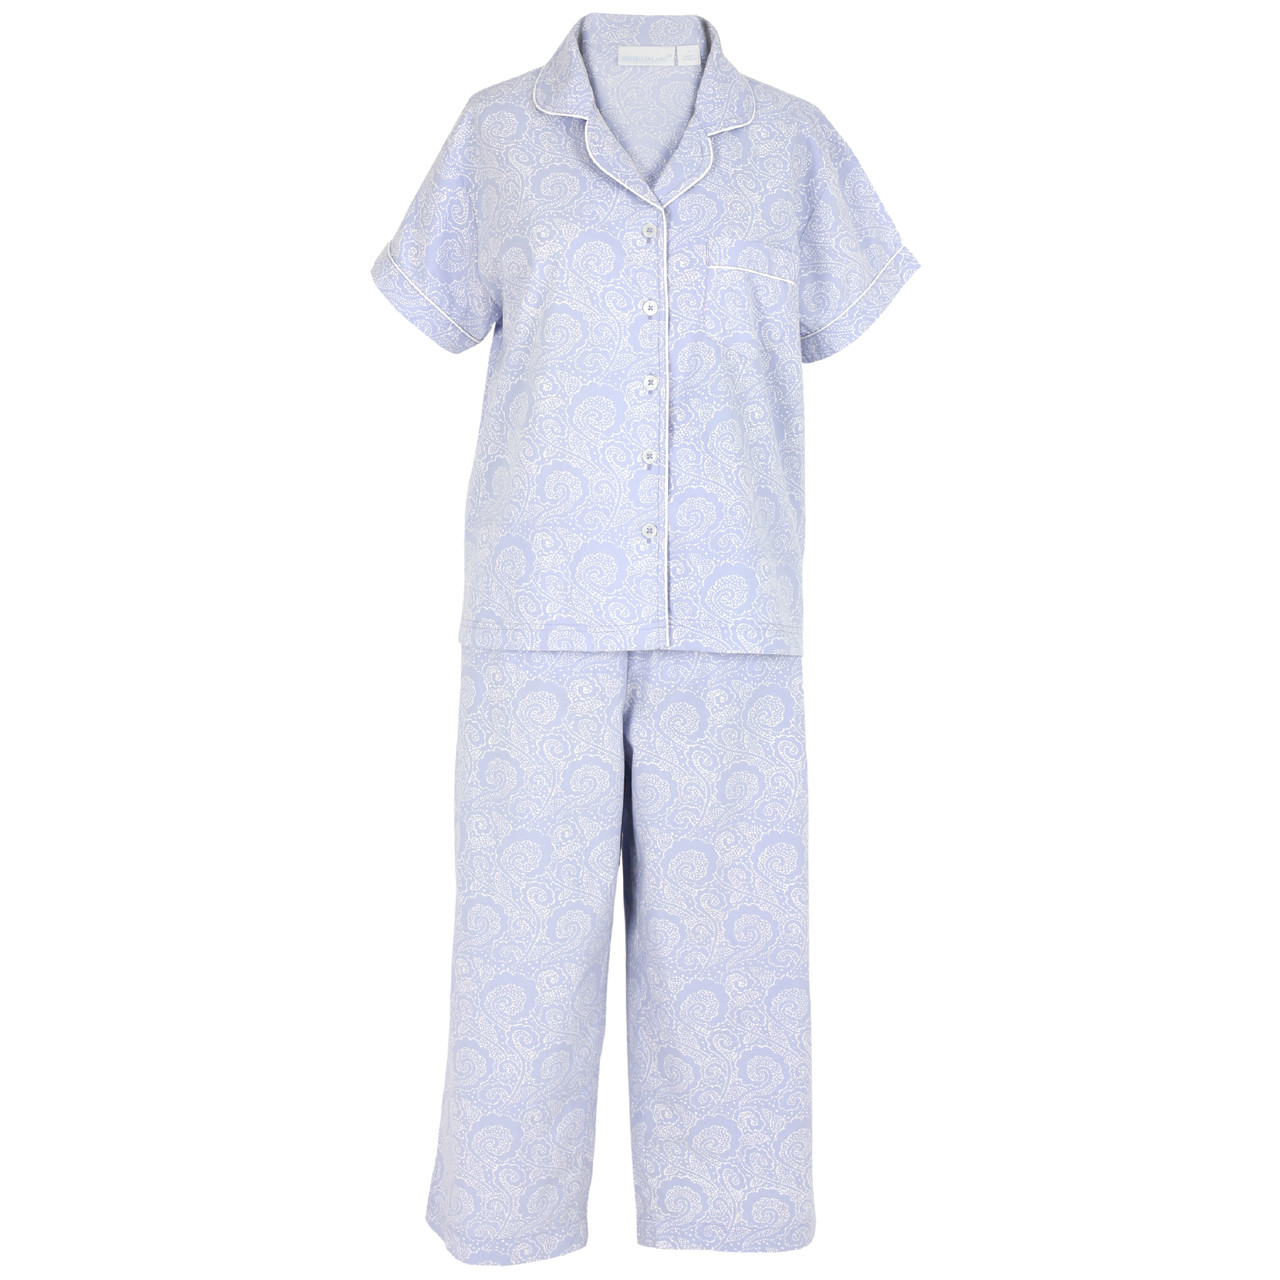 VENTELAN Pajamas For Women Short Sleeve Capri Pajama Set Soft Sleepwear,  Grey-coffee, Medium price in Saudi Arabia,  Saudi Arabia